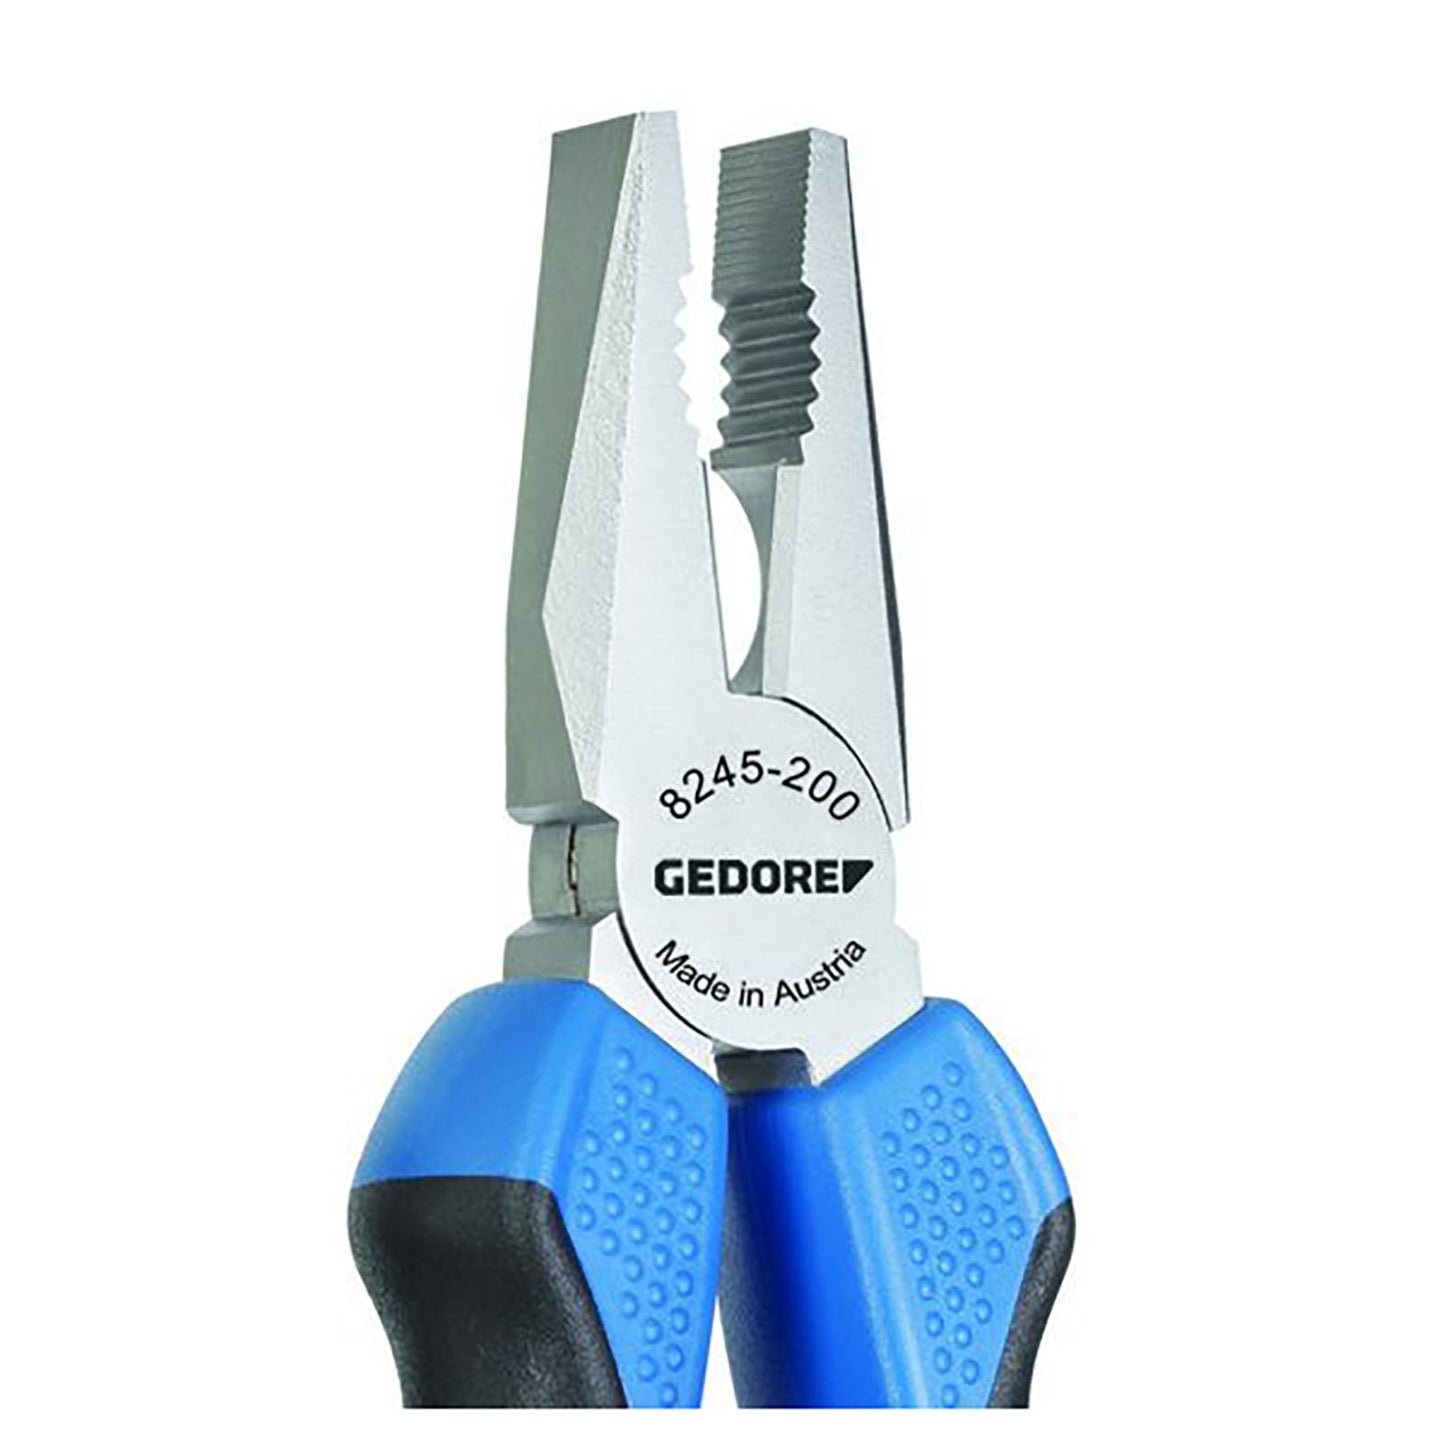 GEDORE 8245-200 JC - Universal pliers 200 mm (6733230)